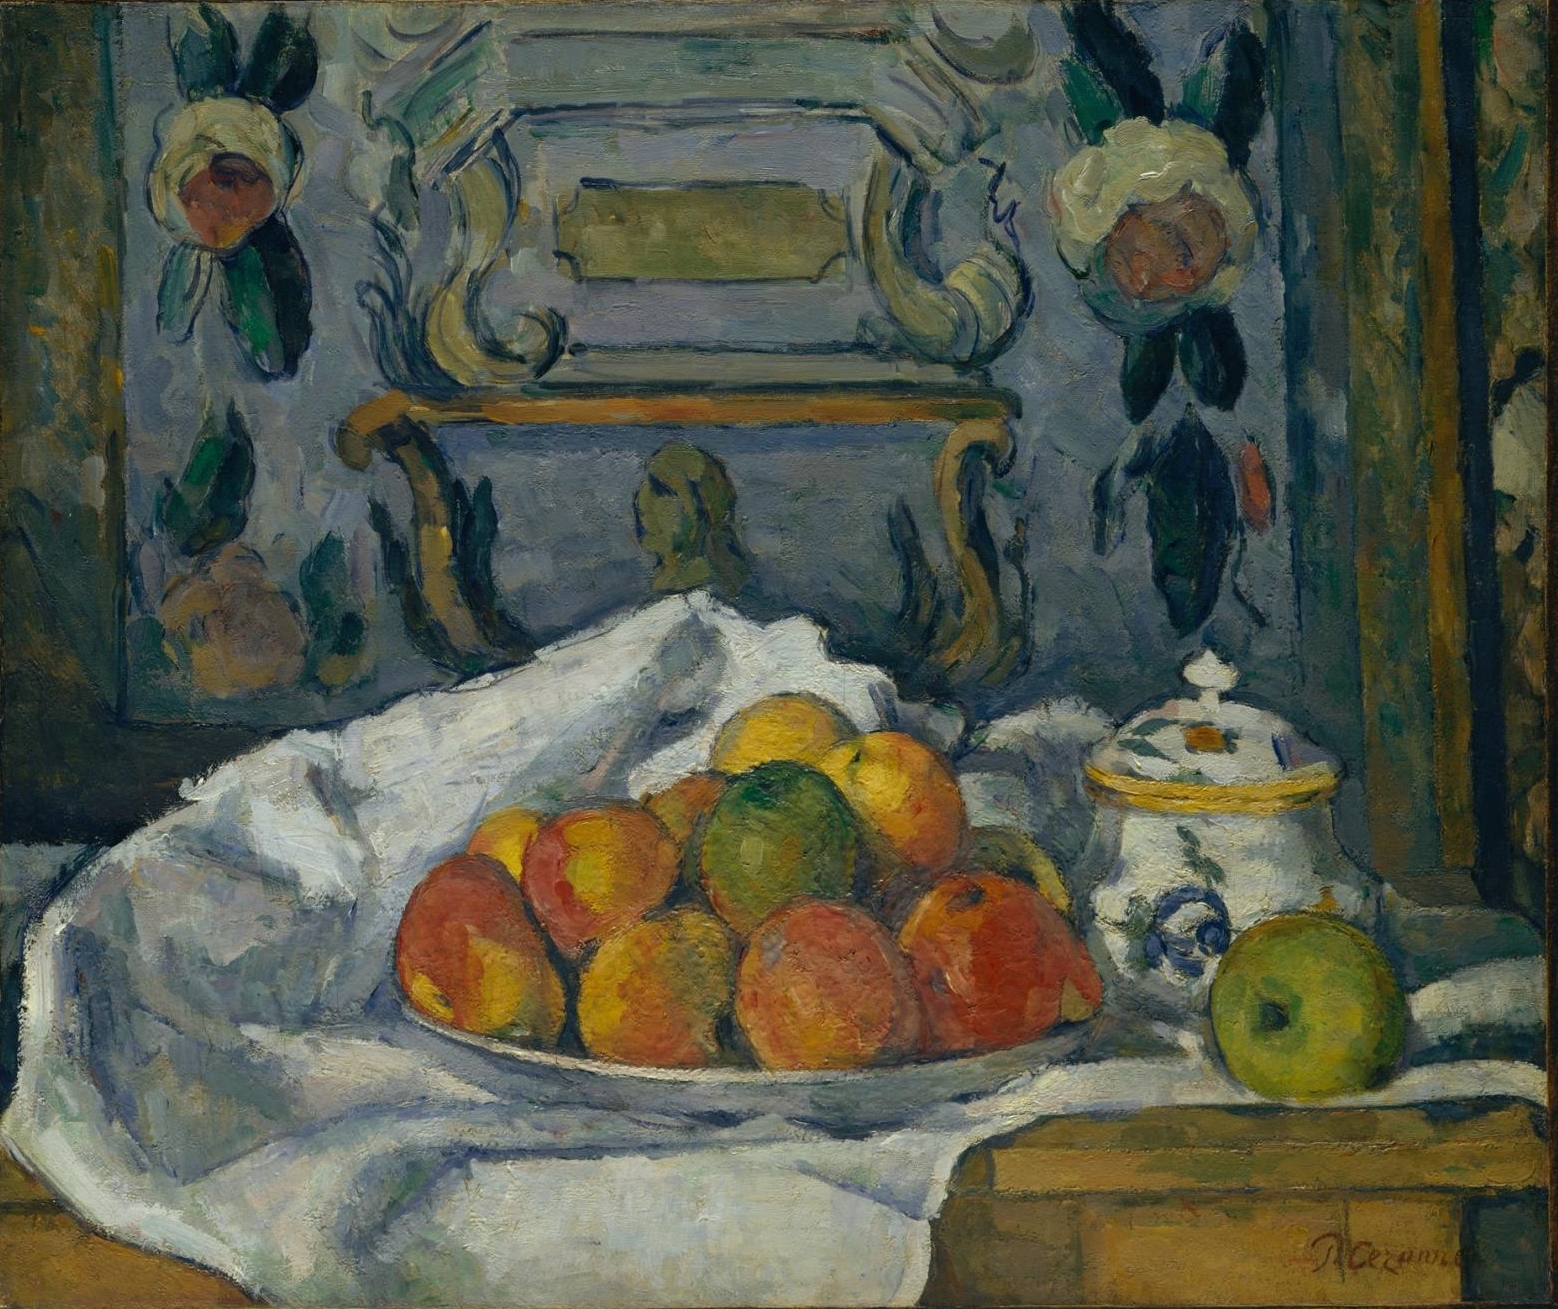 Paul+Cezanne-1839-1906 (160).jpg